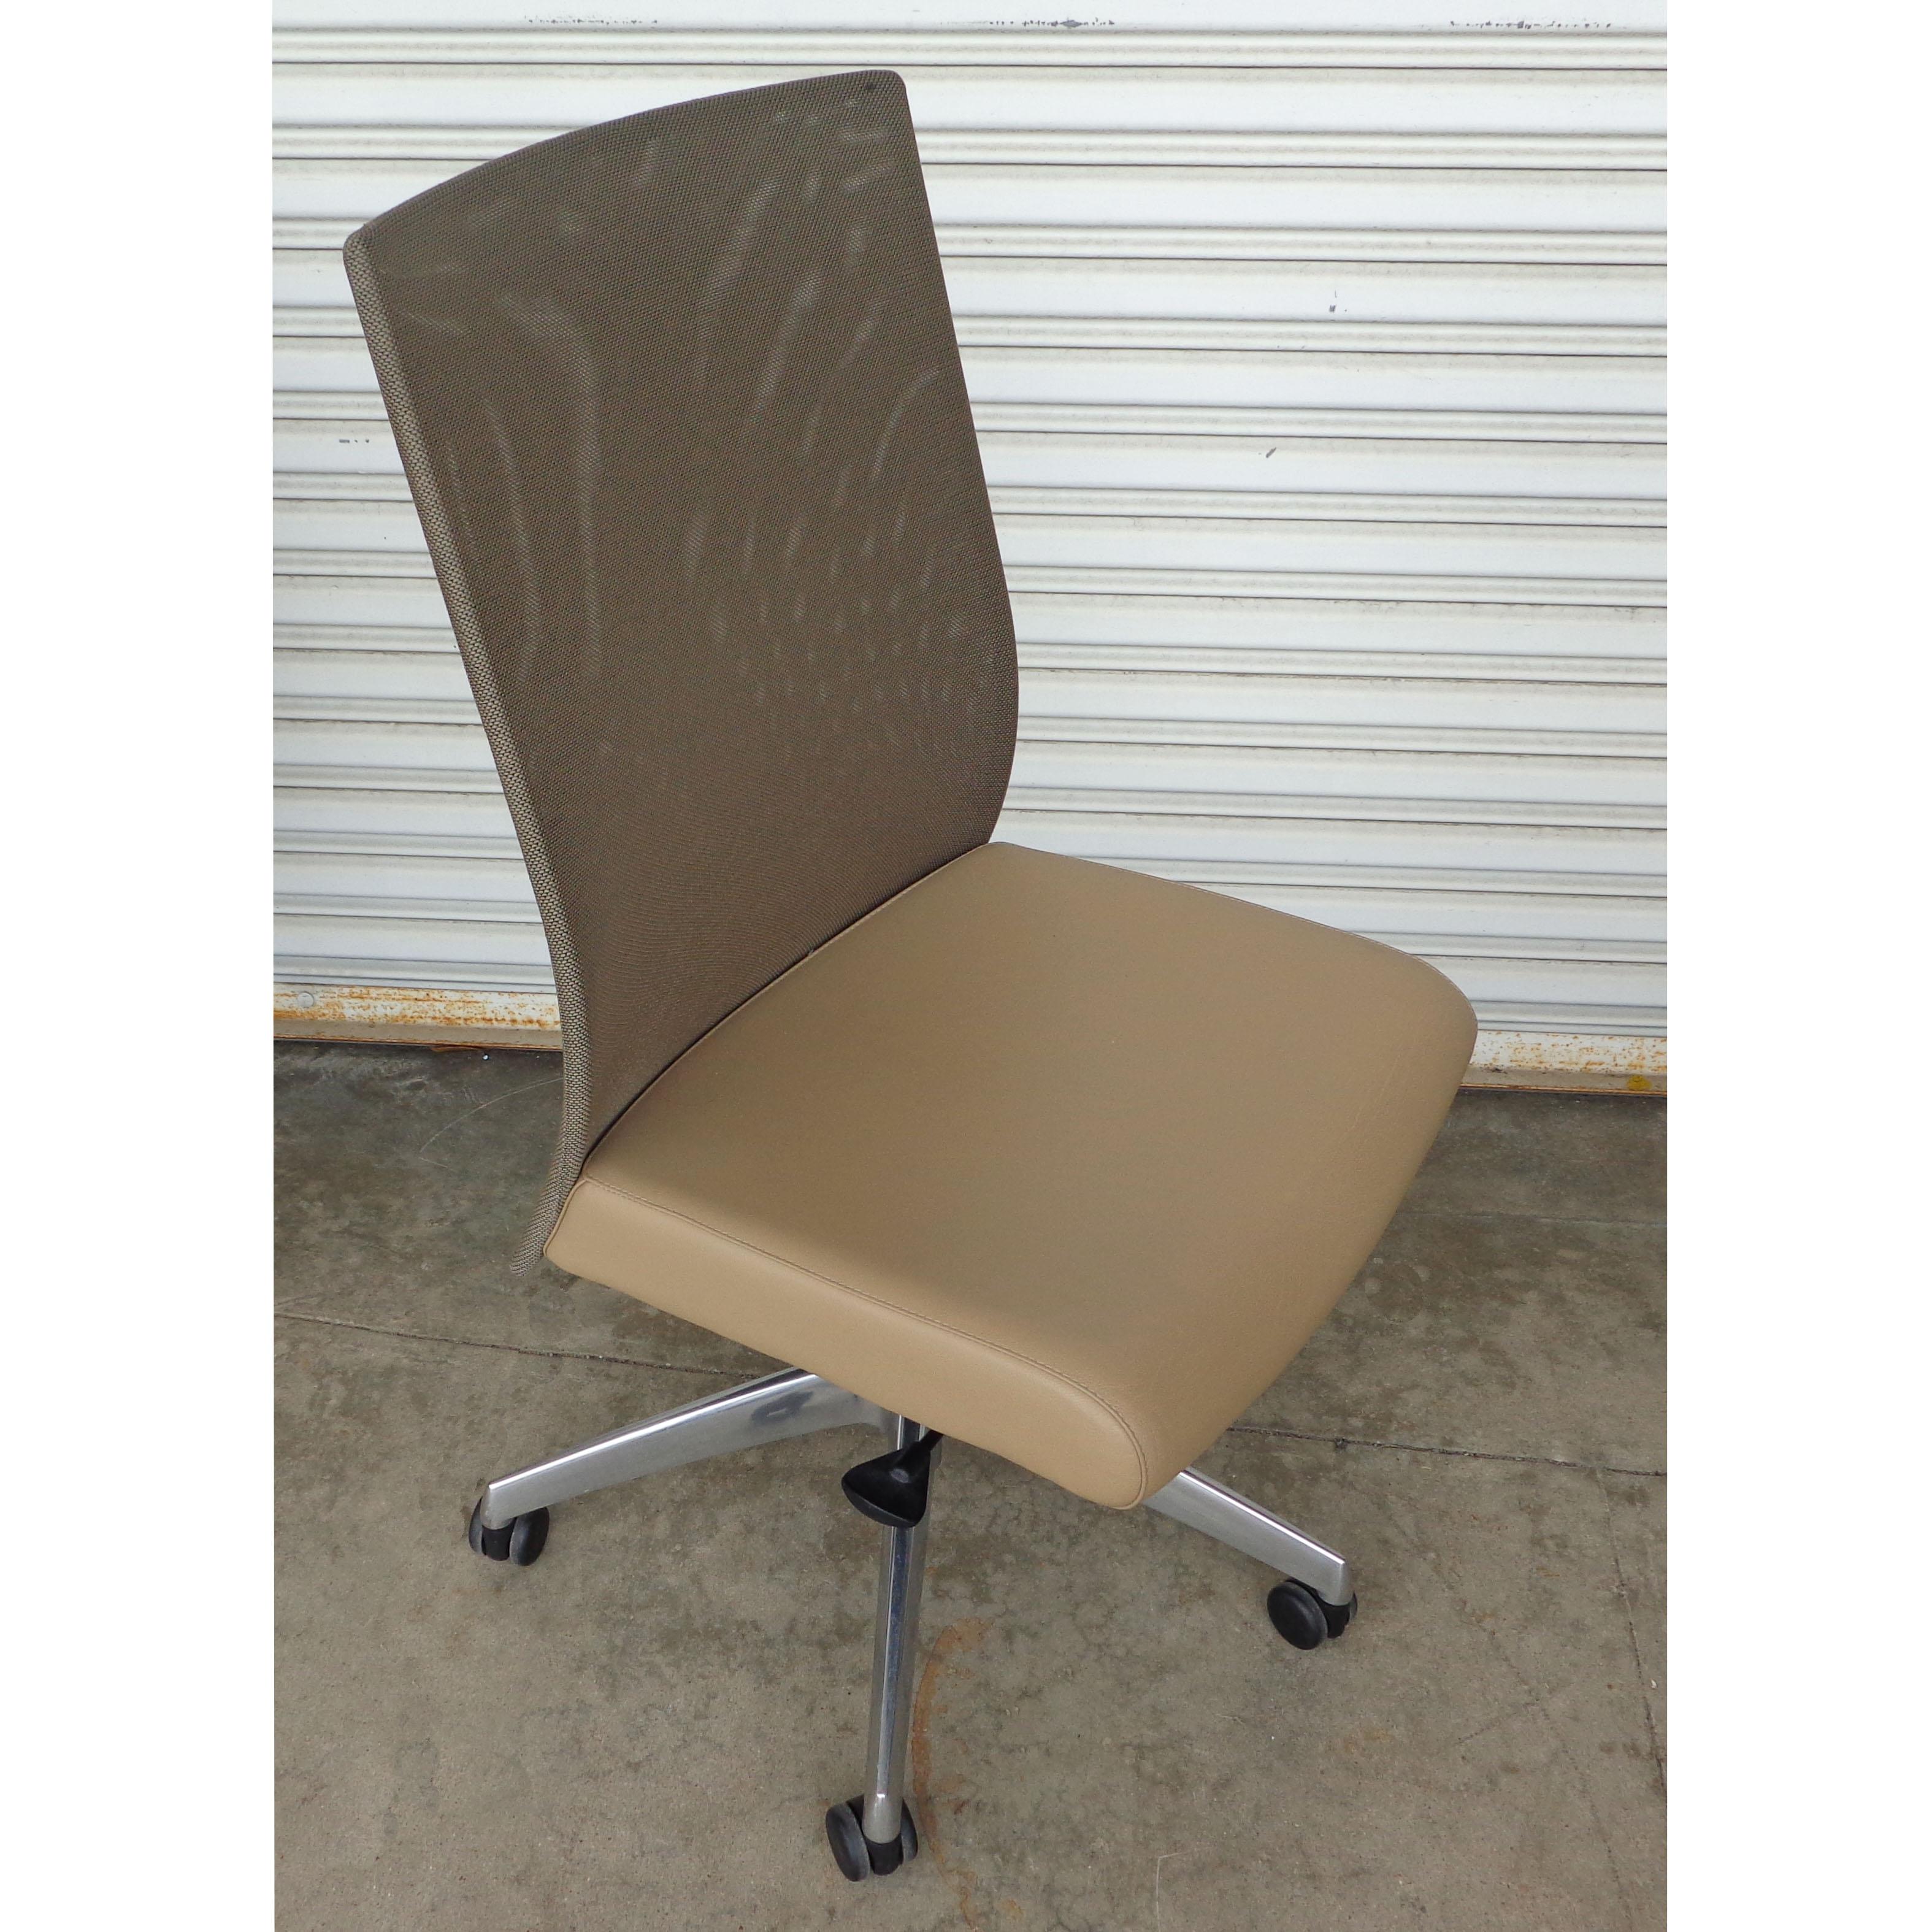 stylex office chair